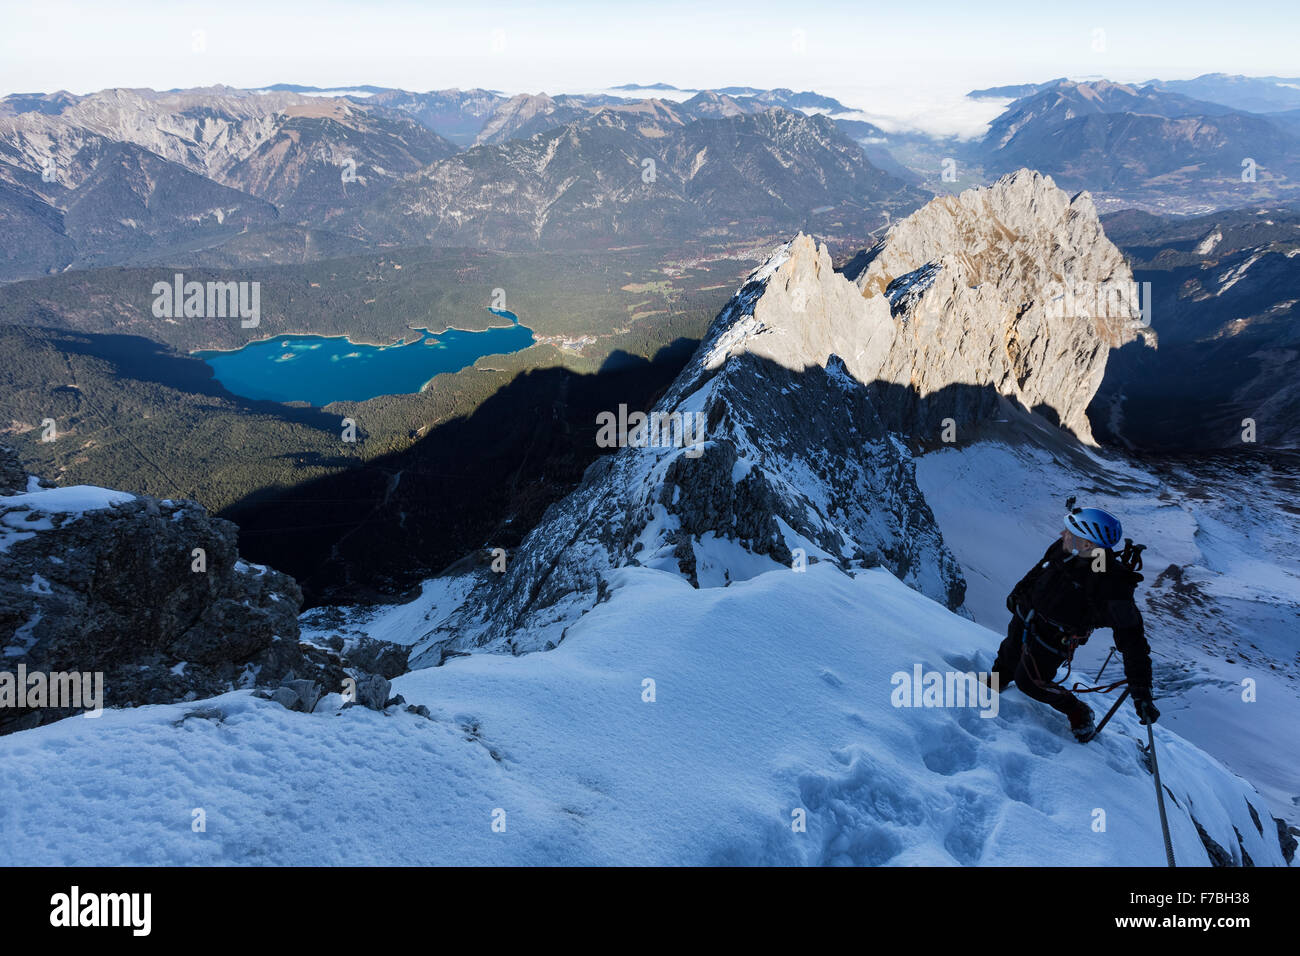 Almost at the summit of Zugspitze mountain, Garmisch-Partenkirchen, Germany, Alps, Europe, EU Stock Photo